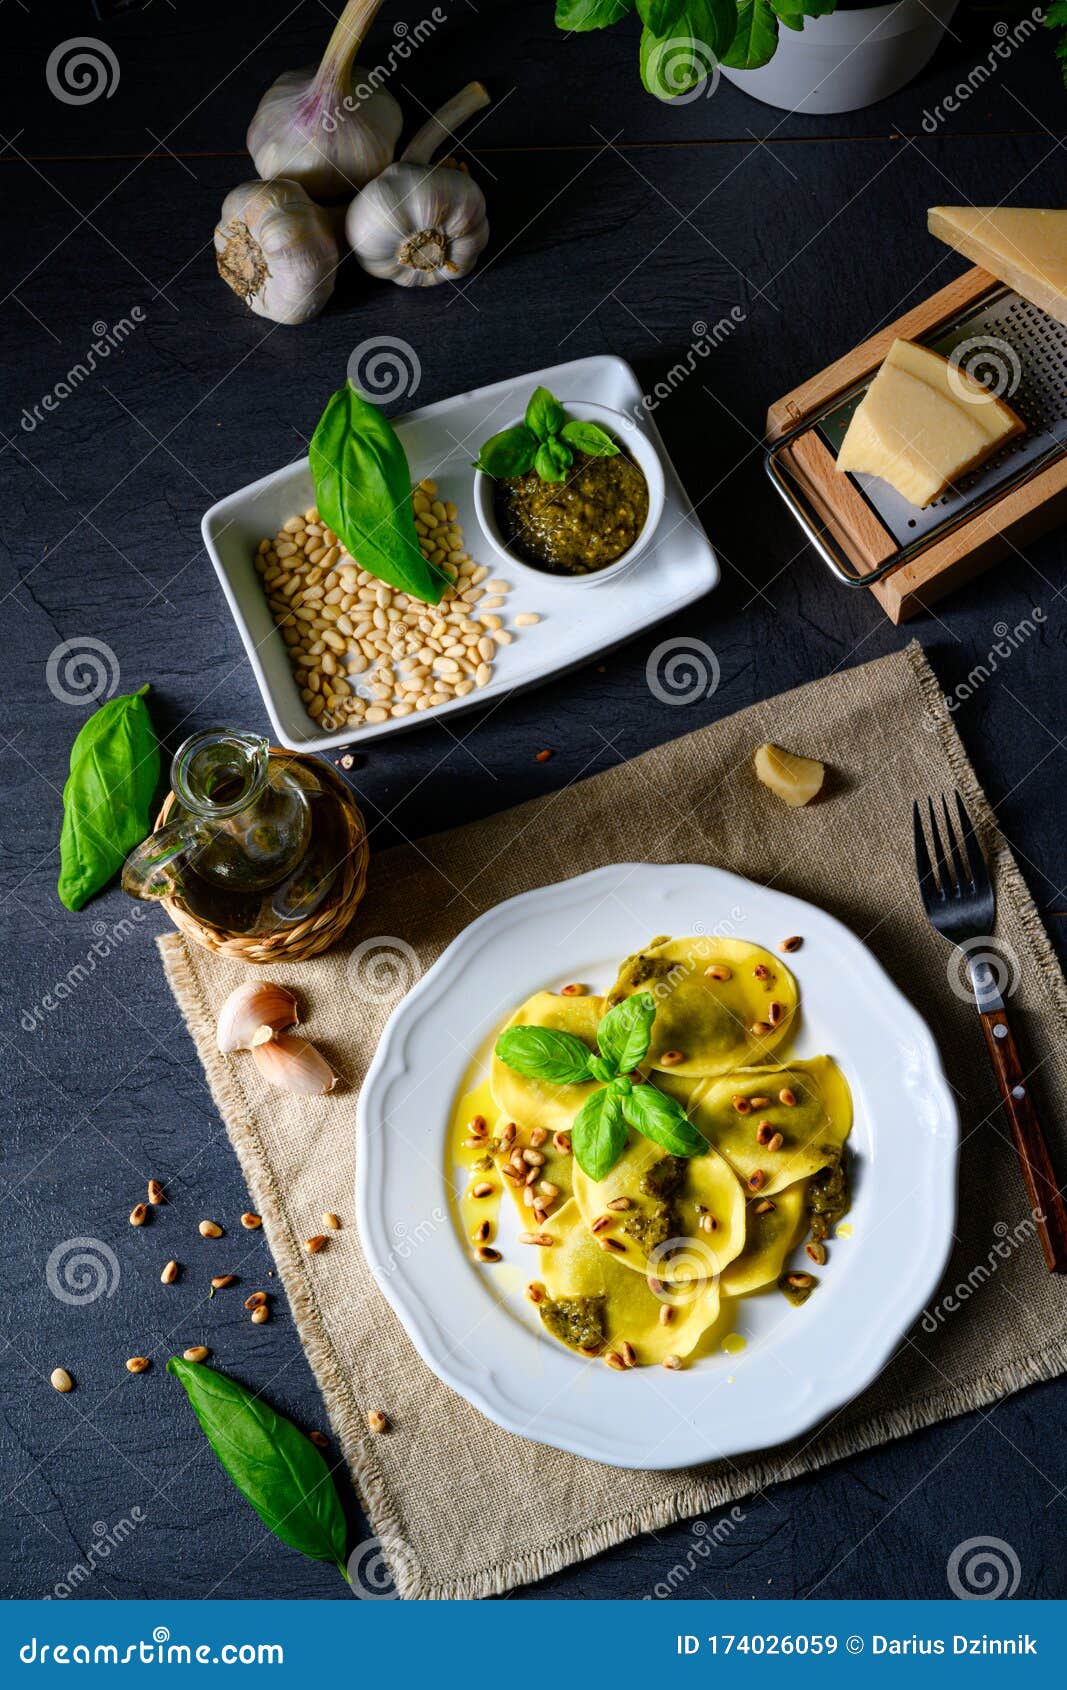 vegetariano italiano! tortelli with roasted pine nuts and pesto basilico